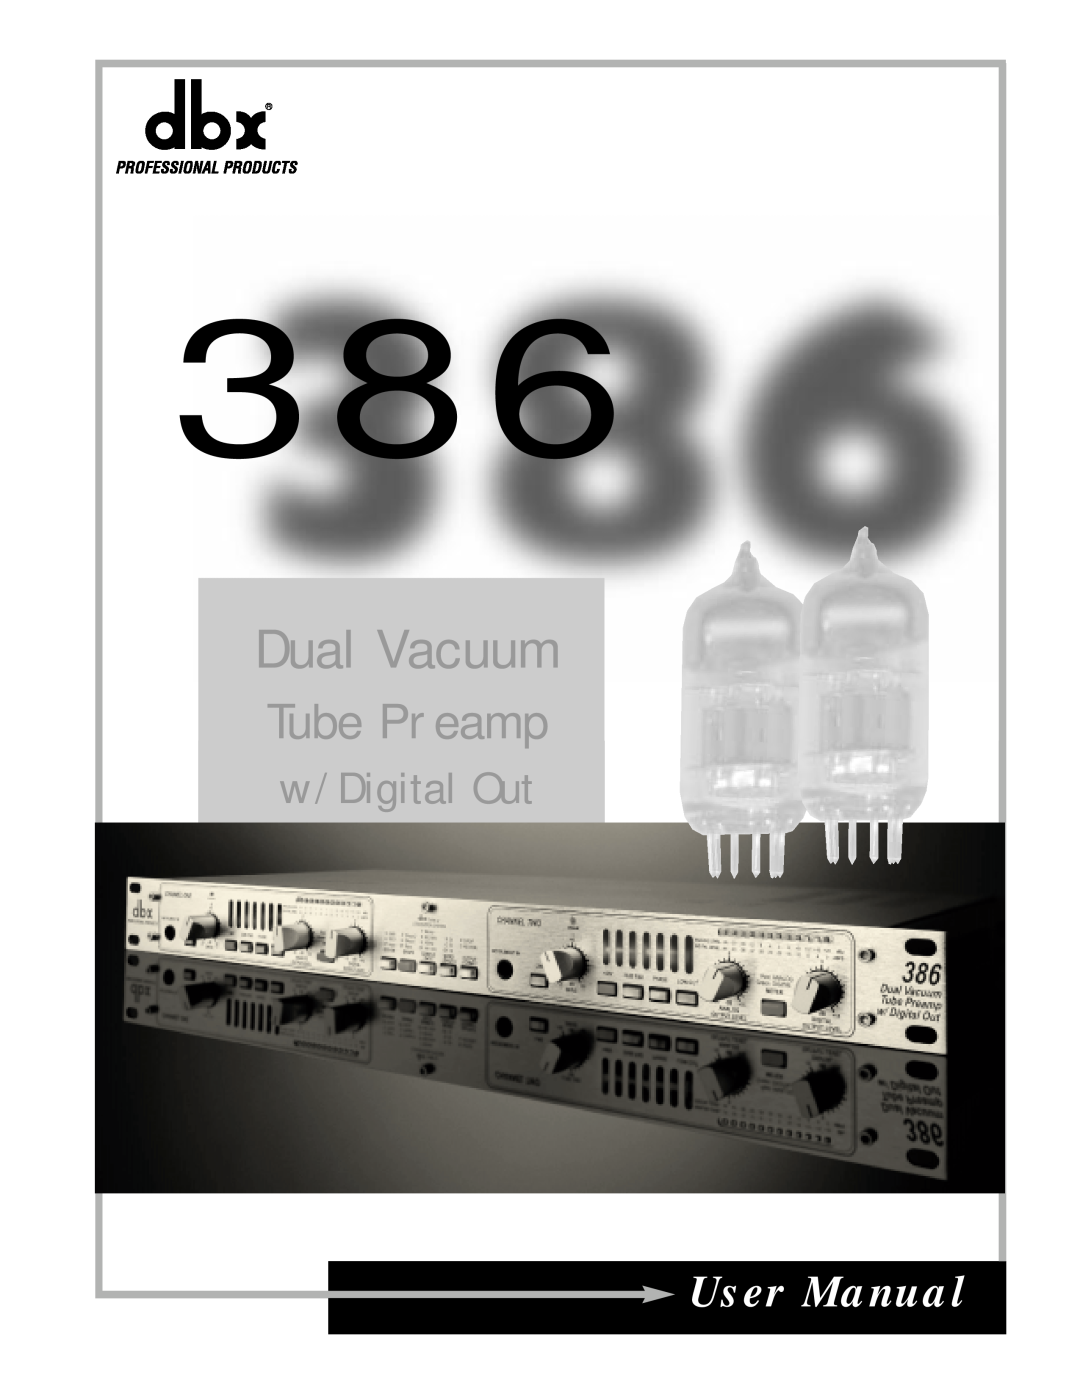 dbx Pro 386 user manual Tube Preamp, Dual Vacuum, w/Digital Out, User Manual 